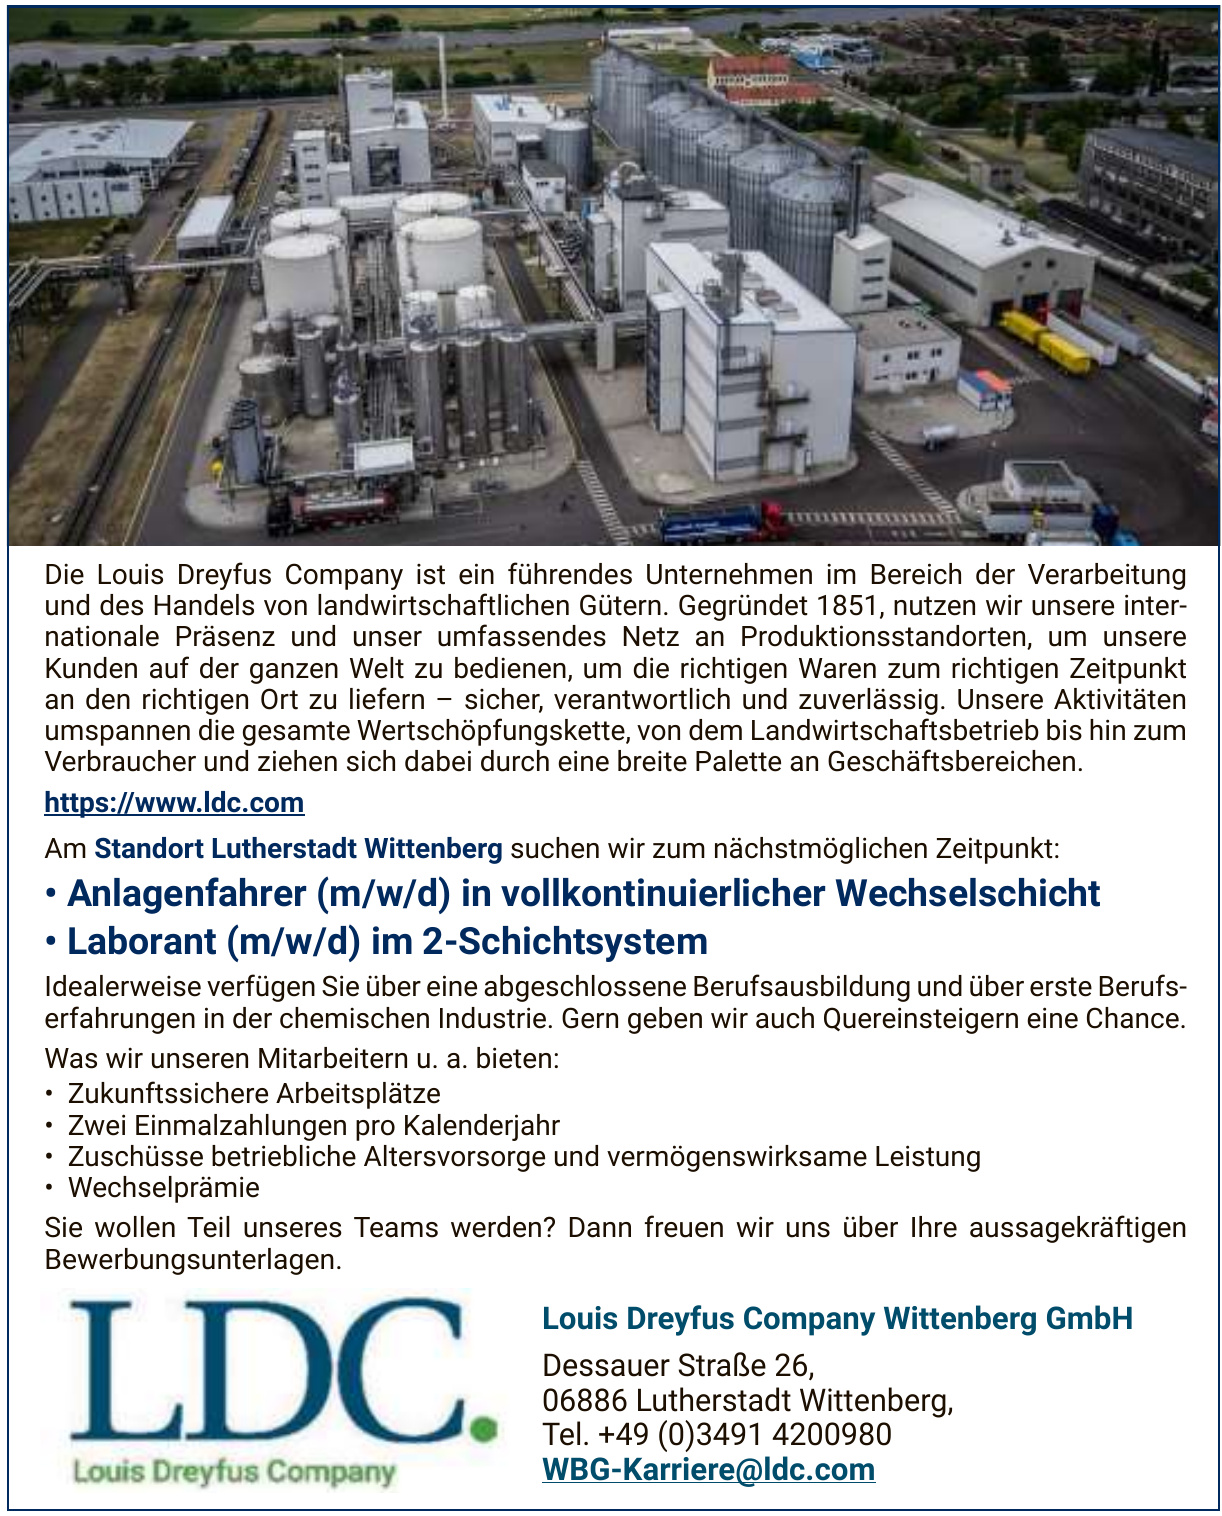 Louis Dreyfus Company Wittenberg GmbH